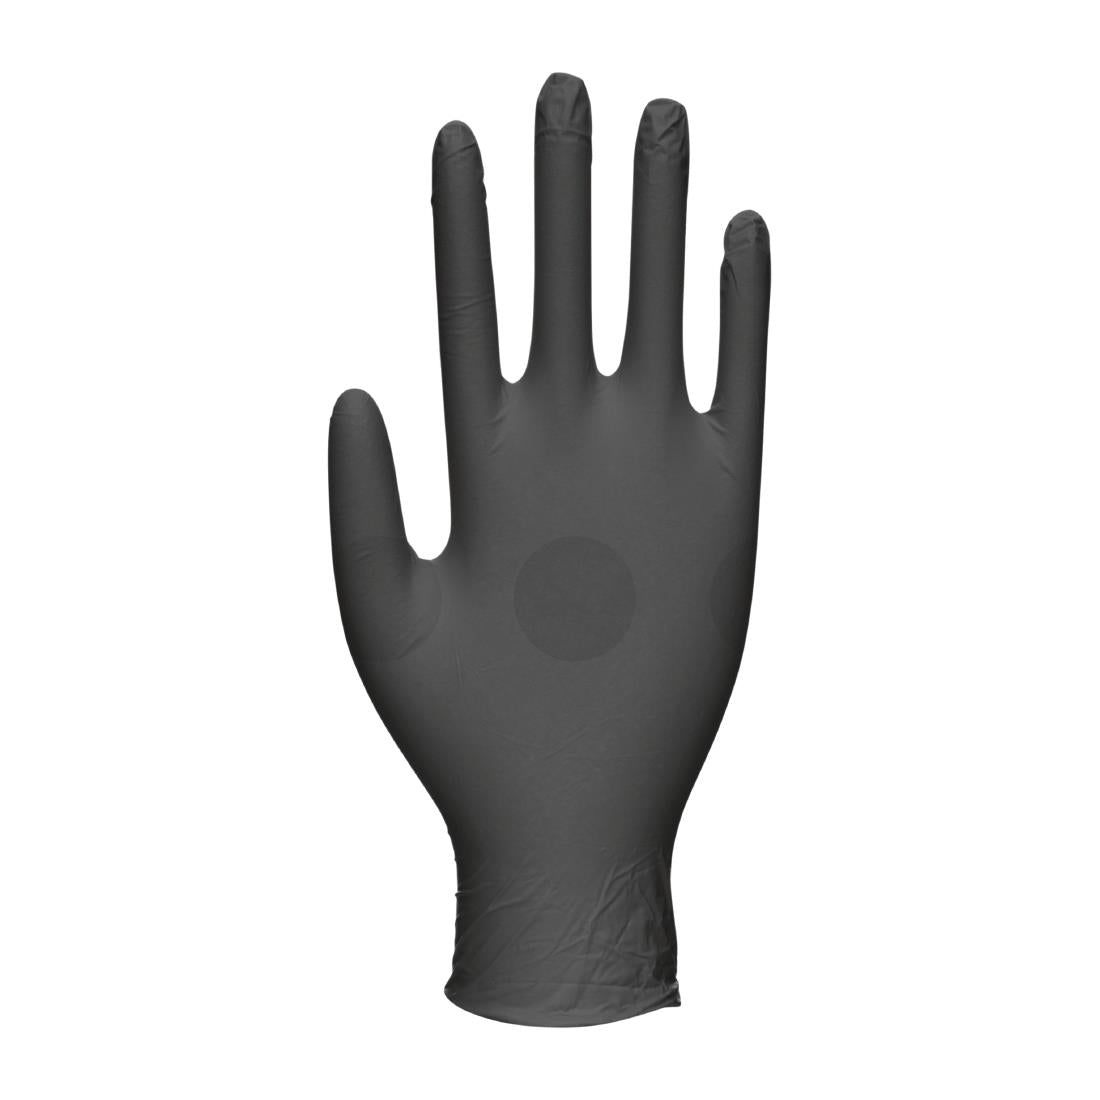 FW845-M Biotouch Single Use Glove Black Nitrile Powder Free Size Medium (Pack of 100)